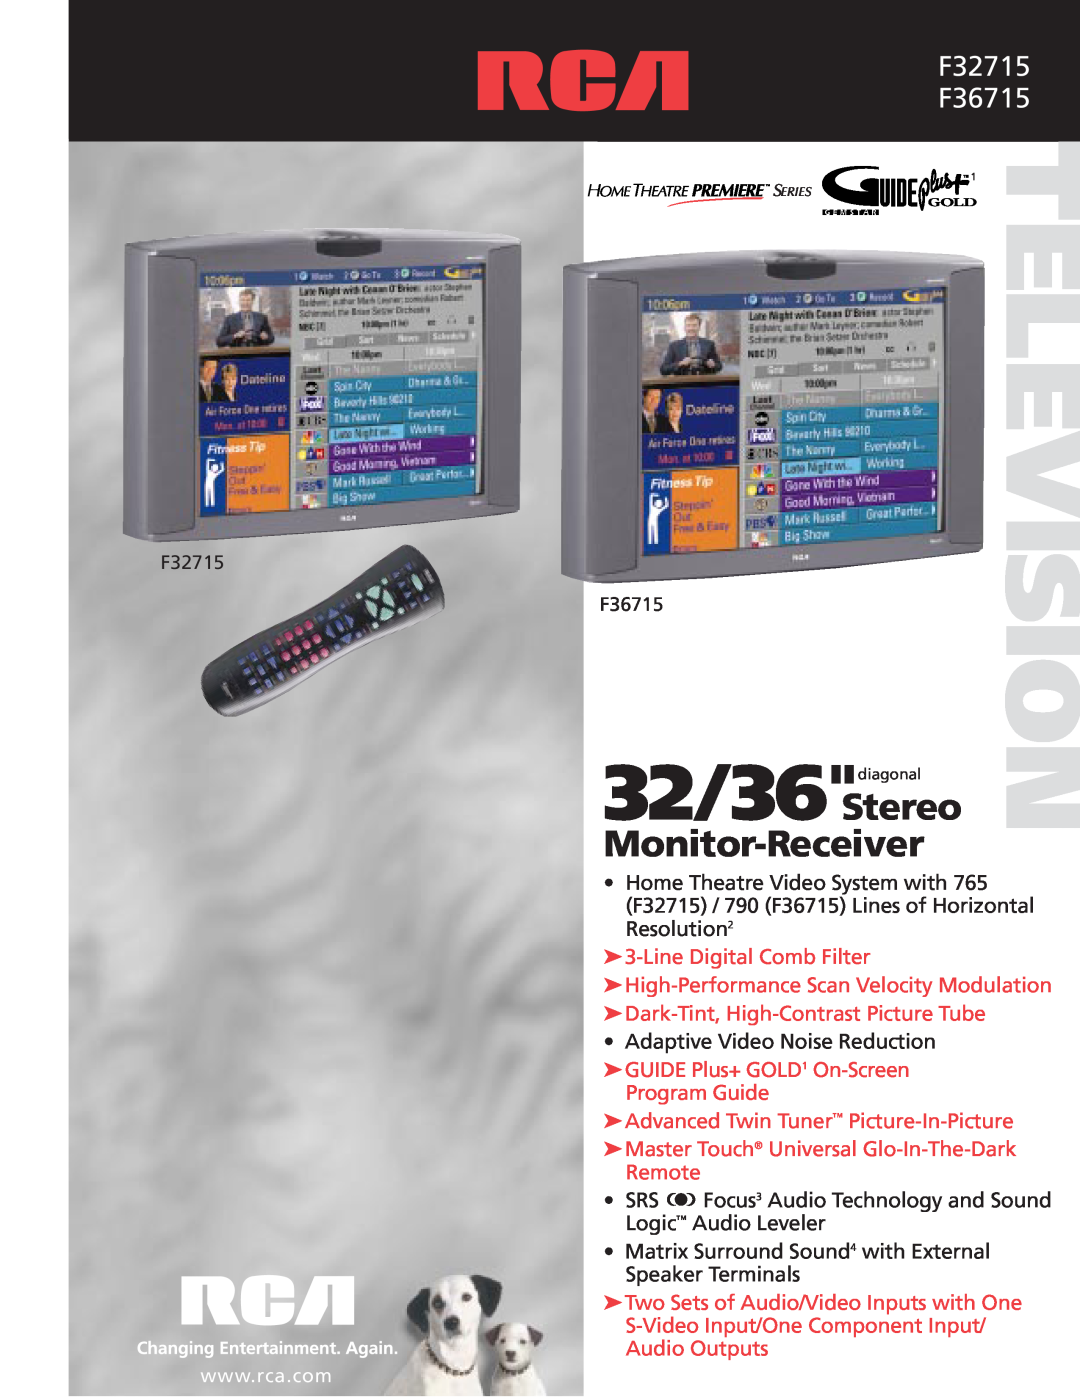 RCA manual 32/36 Stereo, Television, Monitor-Receiver, F32715 F36715 